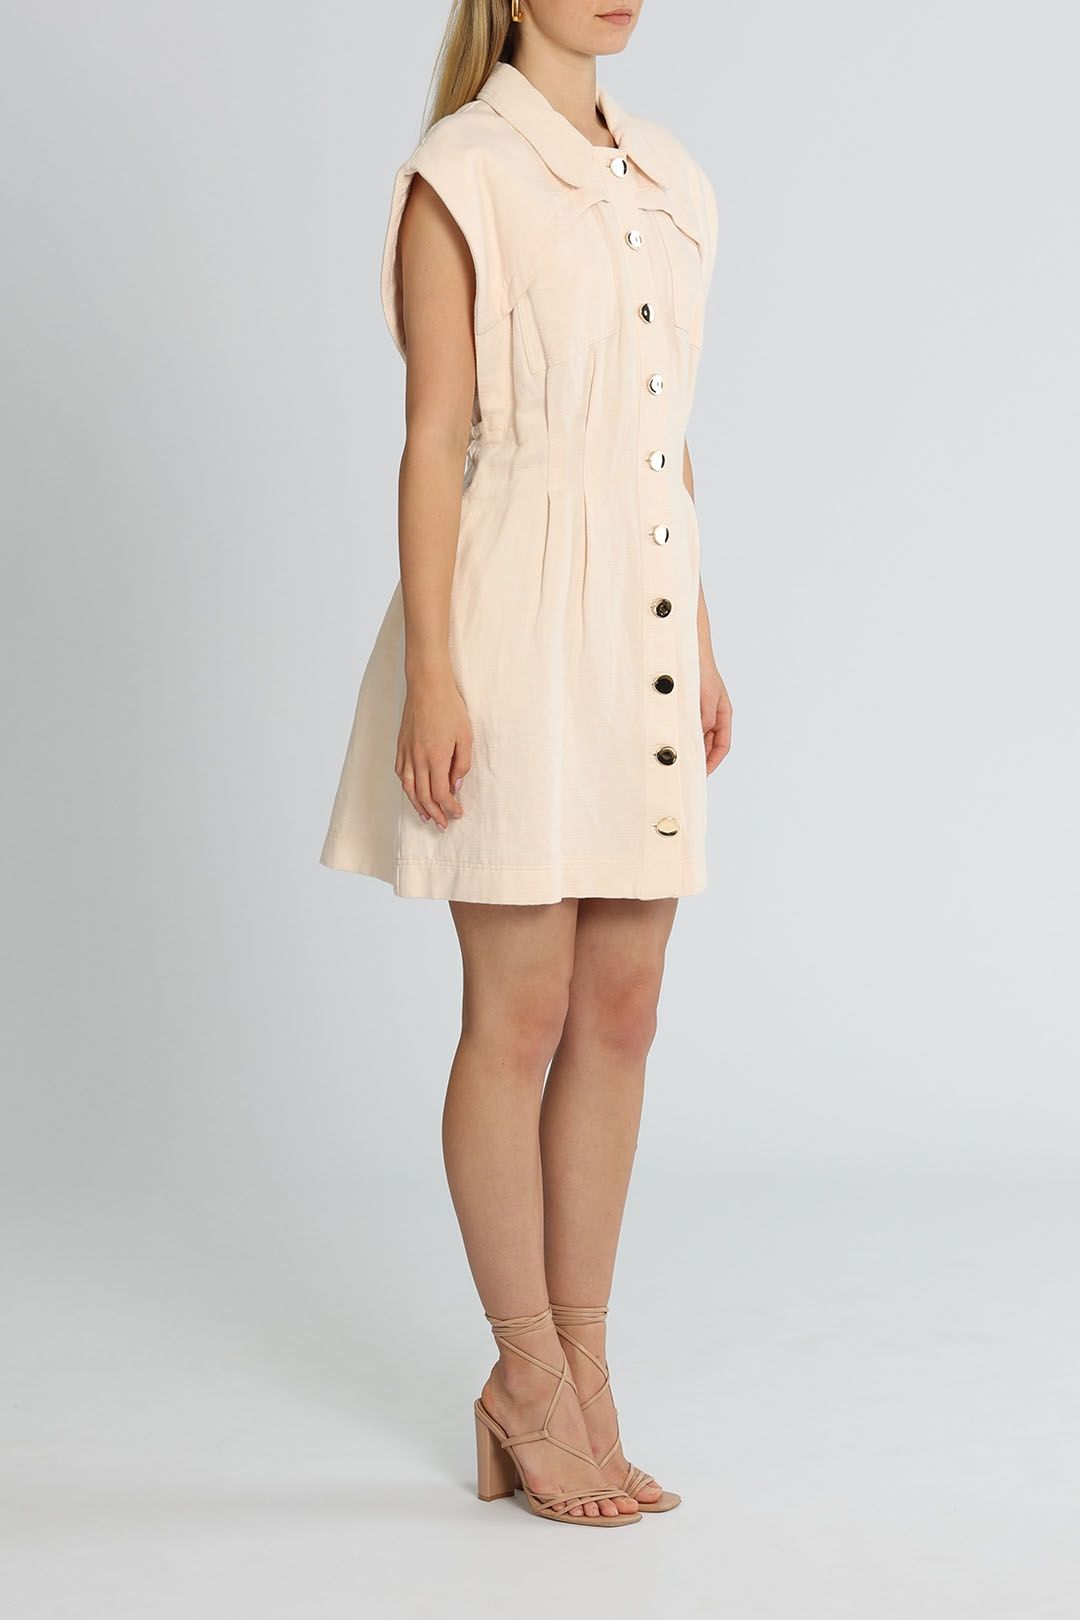 Acler Westcroft Dress in Blush Mini